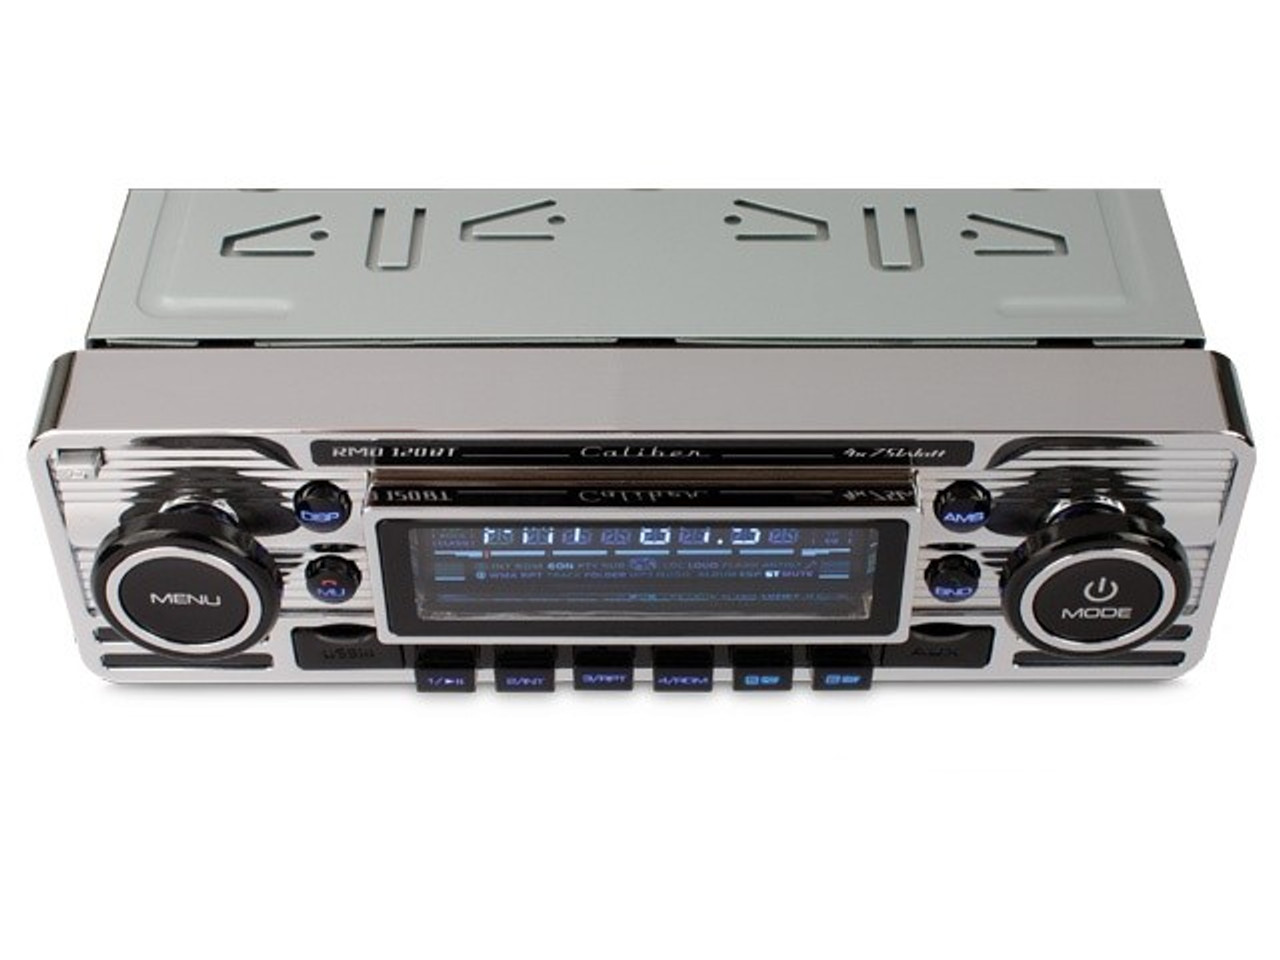 Alpine CDE-190R Single Din Radio CD MP3 USB Player Stereo Head Unit